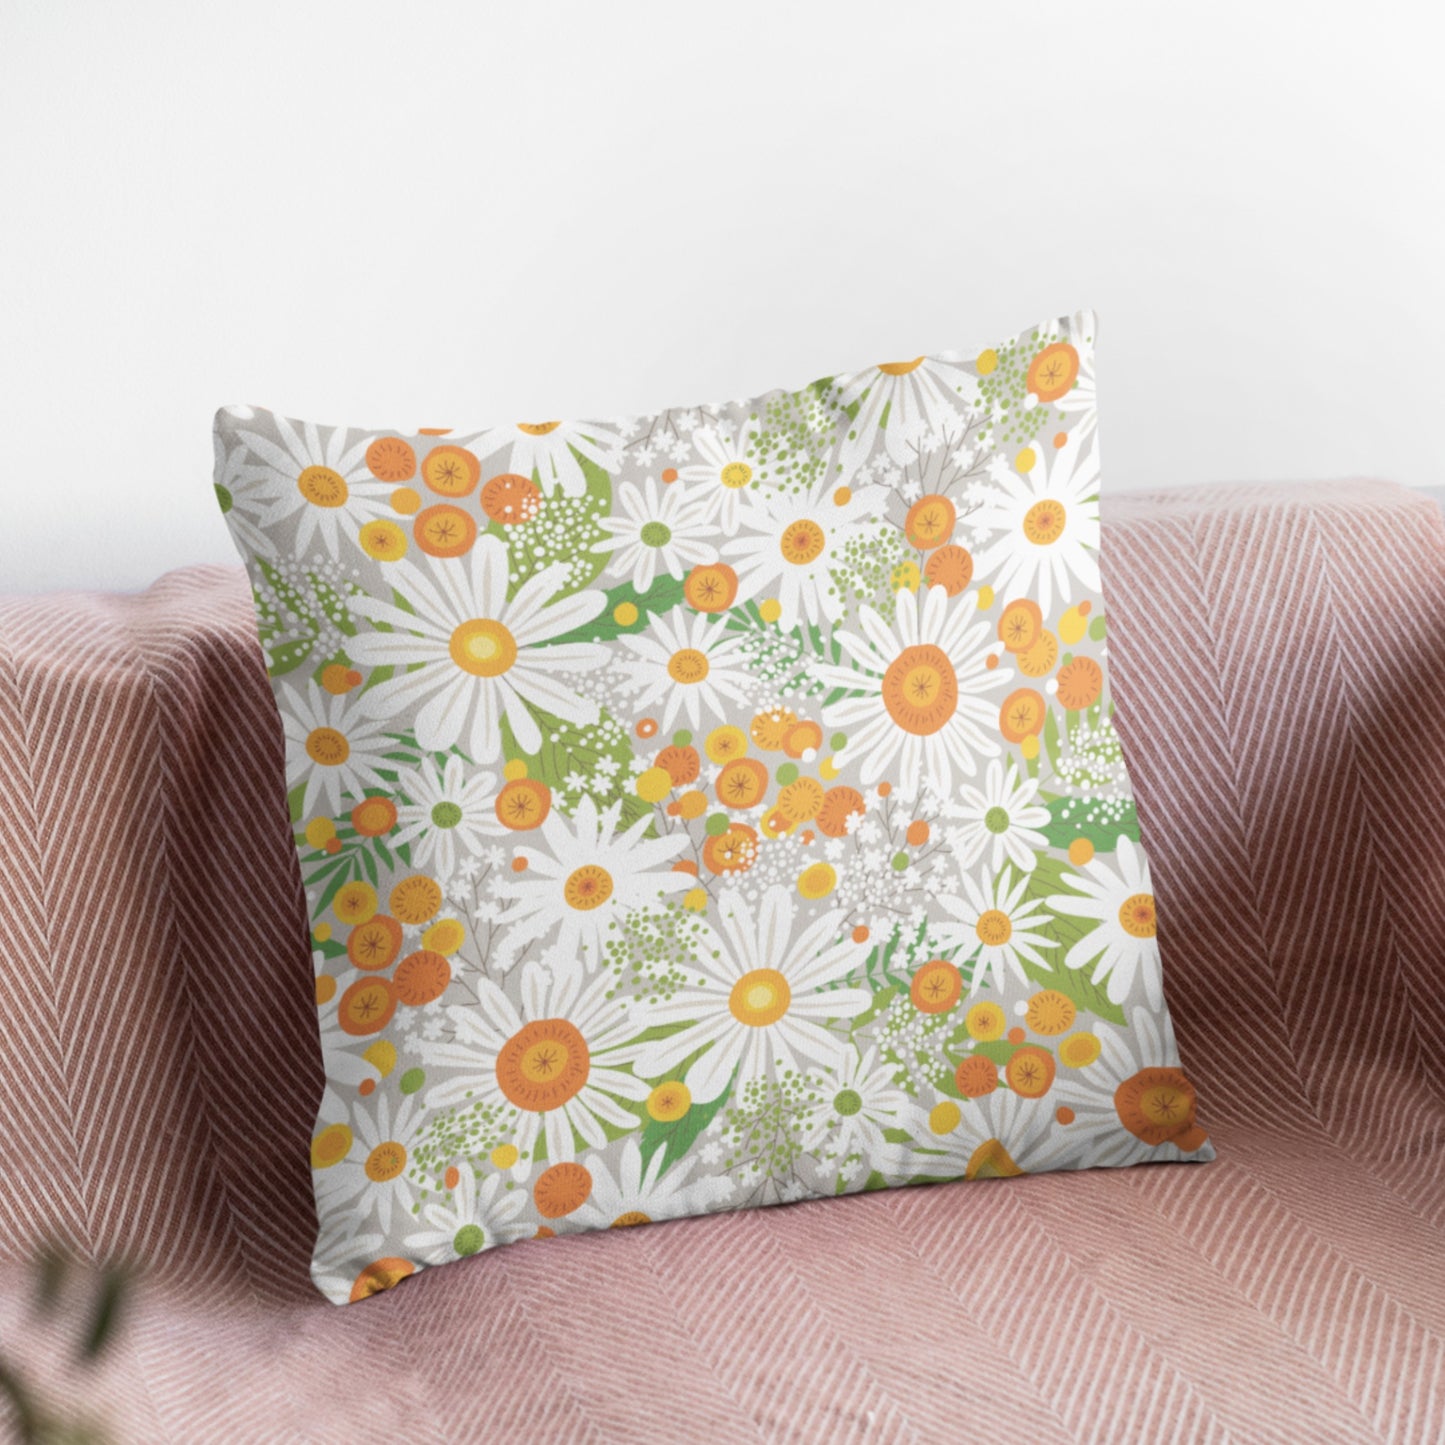 Daisy Printed Decorative Throw Pillow